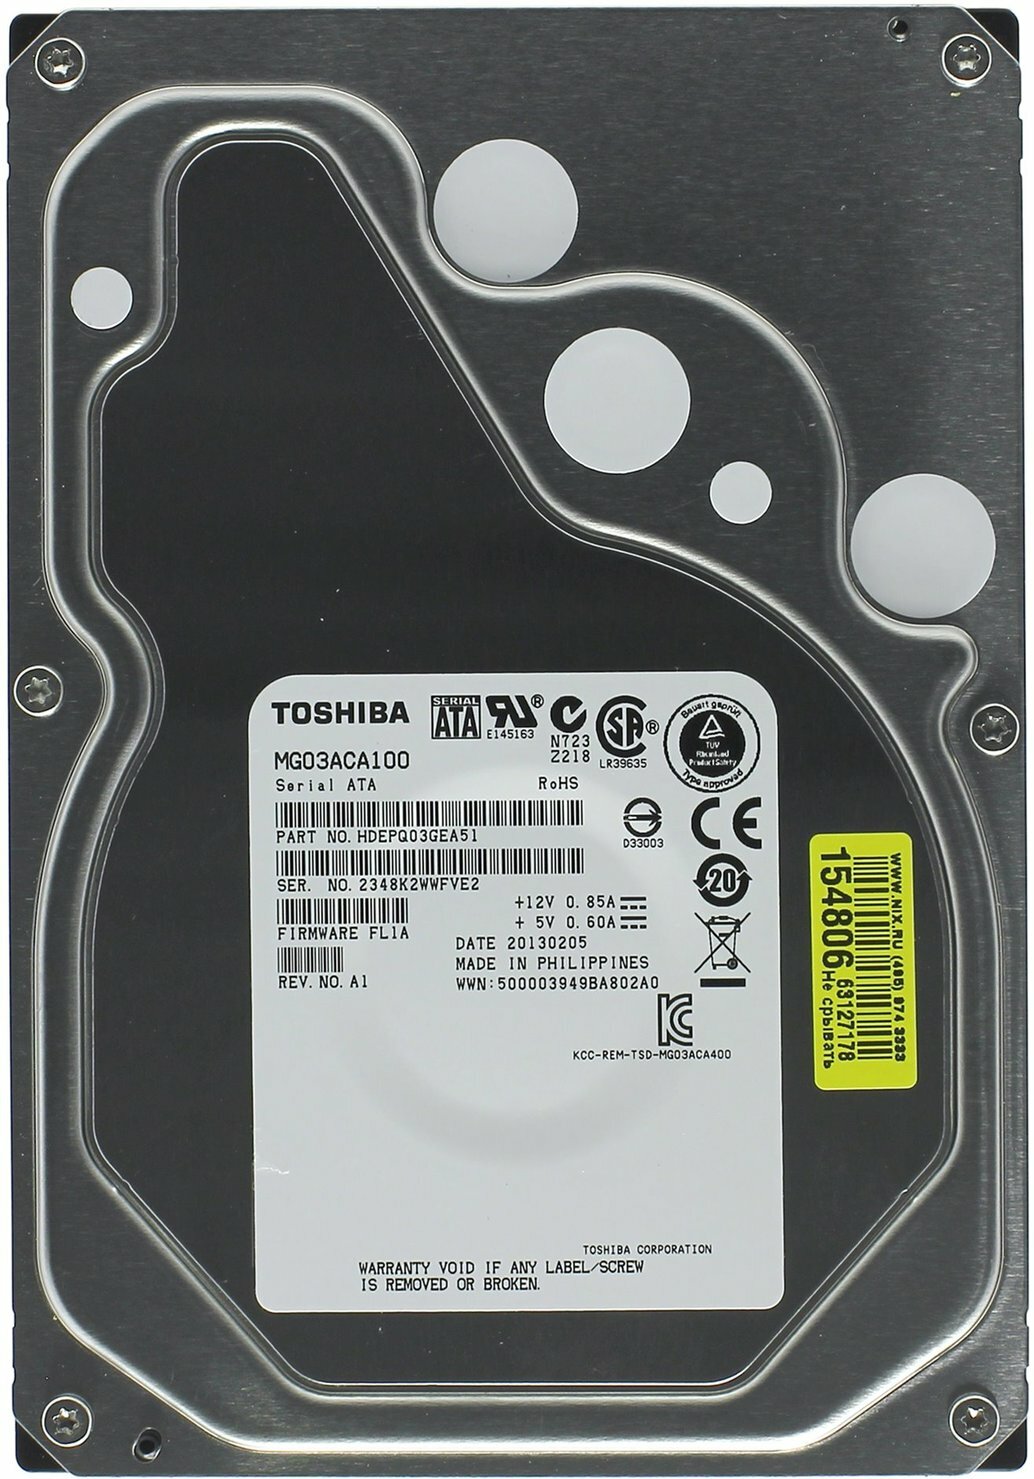 Toshiba T1000-MG03ACA100 3.5" HDD 1.0TB